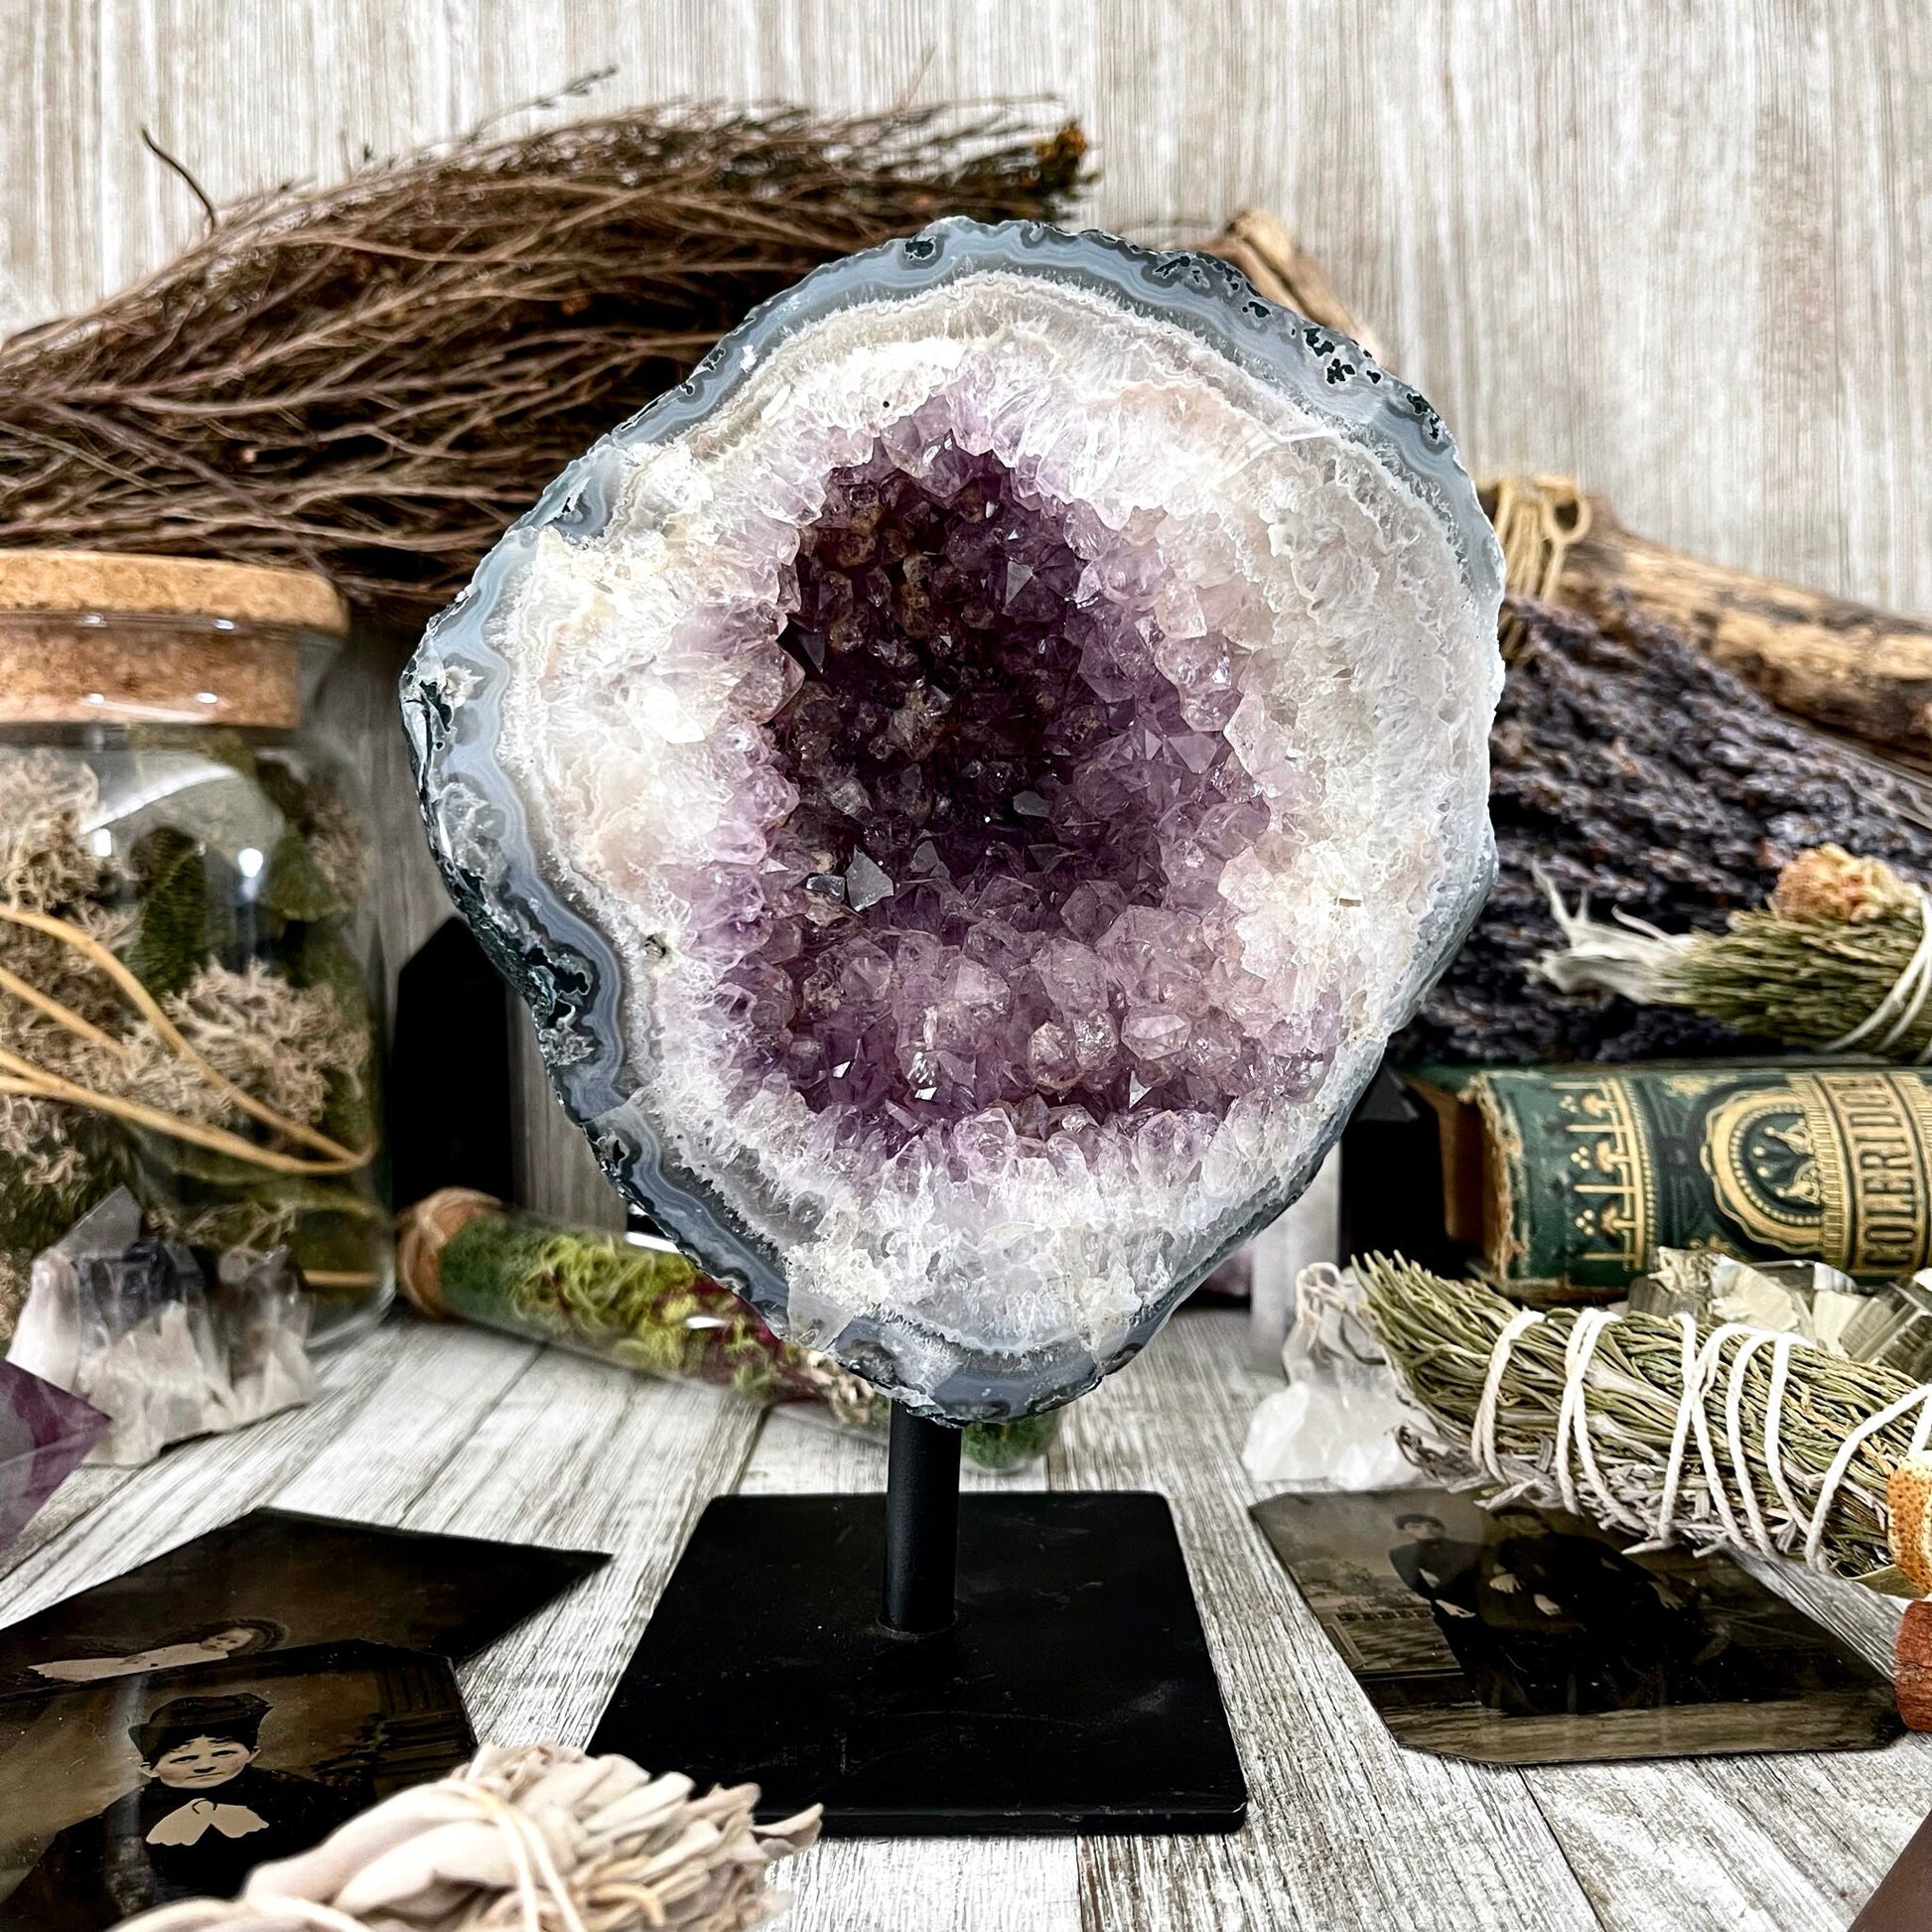 Amethyst Geode, Big Crystal, Crystal cluster, Crystal Decor, Crystal Geode, Crystal Point, Crystal Sphere, Crystals, Etsy ID: 1620551656, healing crystals, Home & Living, Home Decor, large crystal, Purple Amethyst, Rocks & Geodes